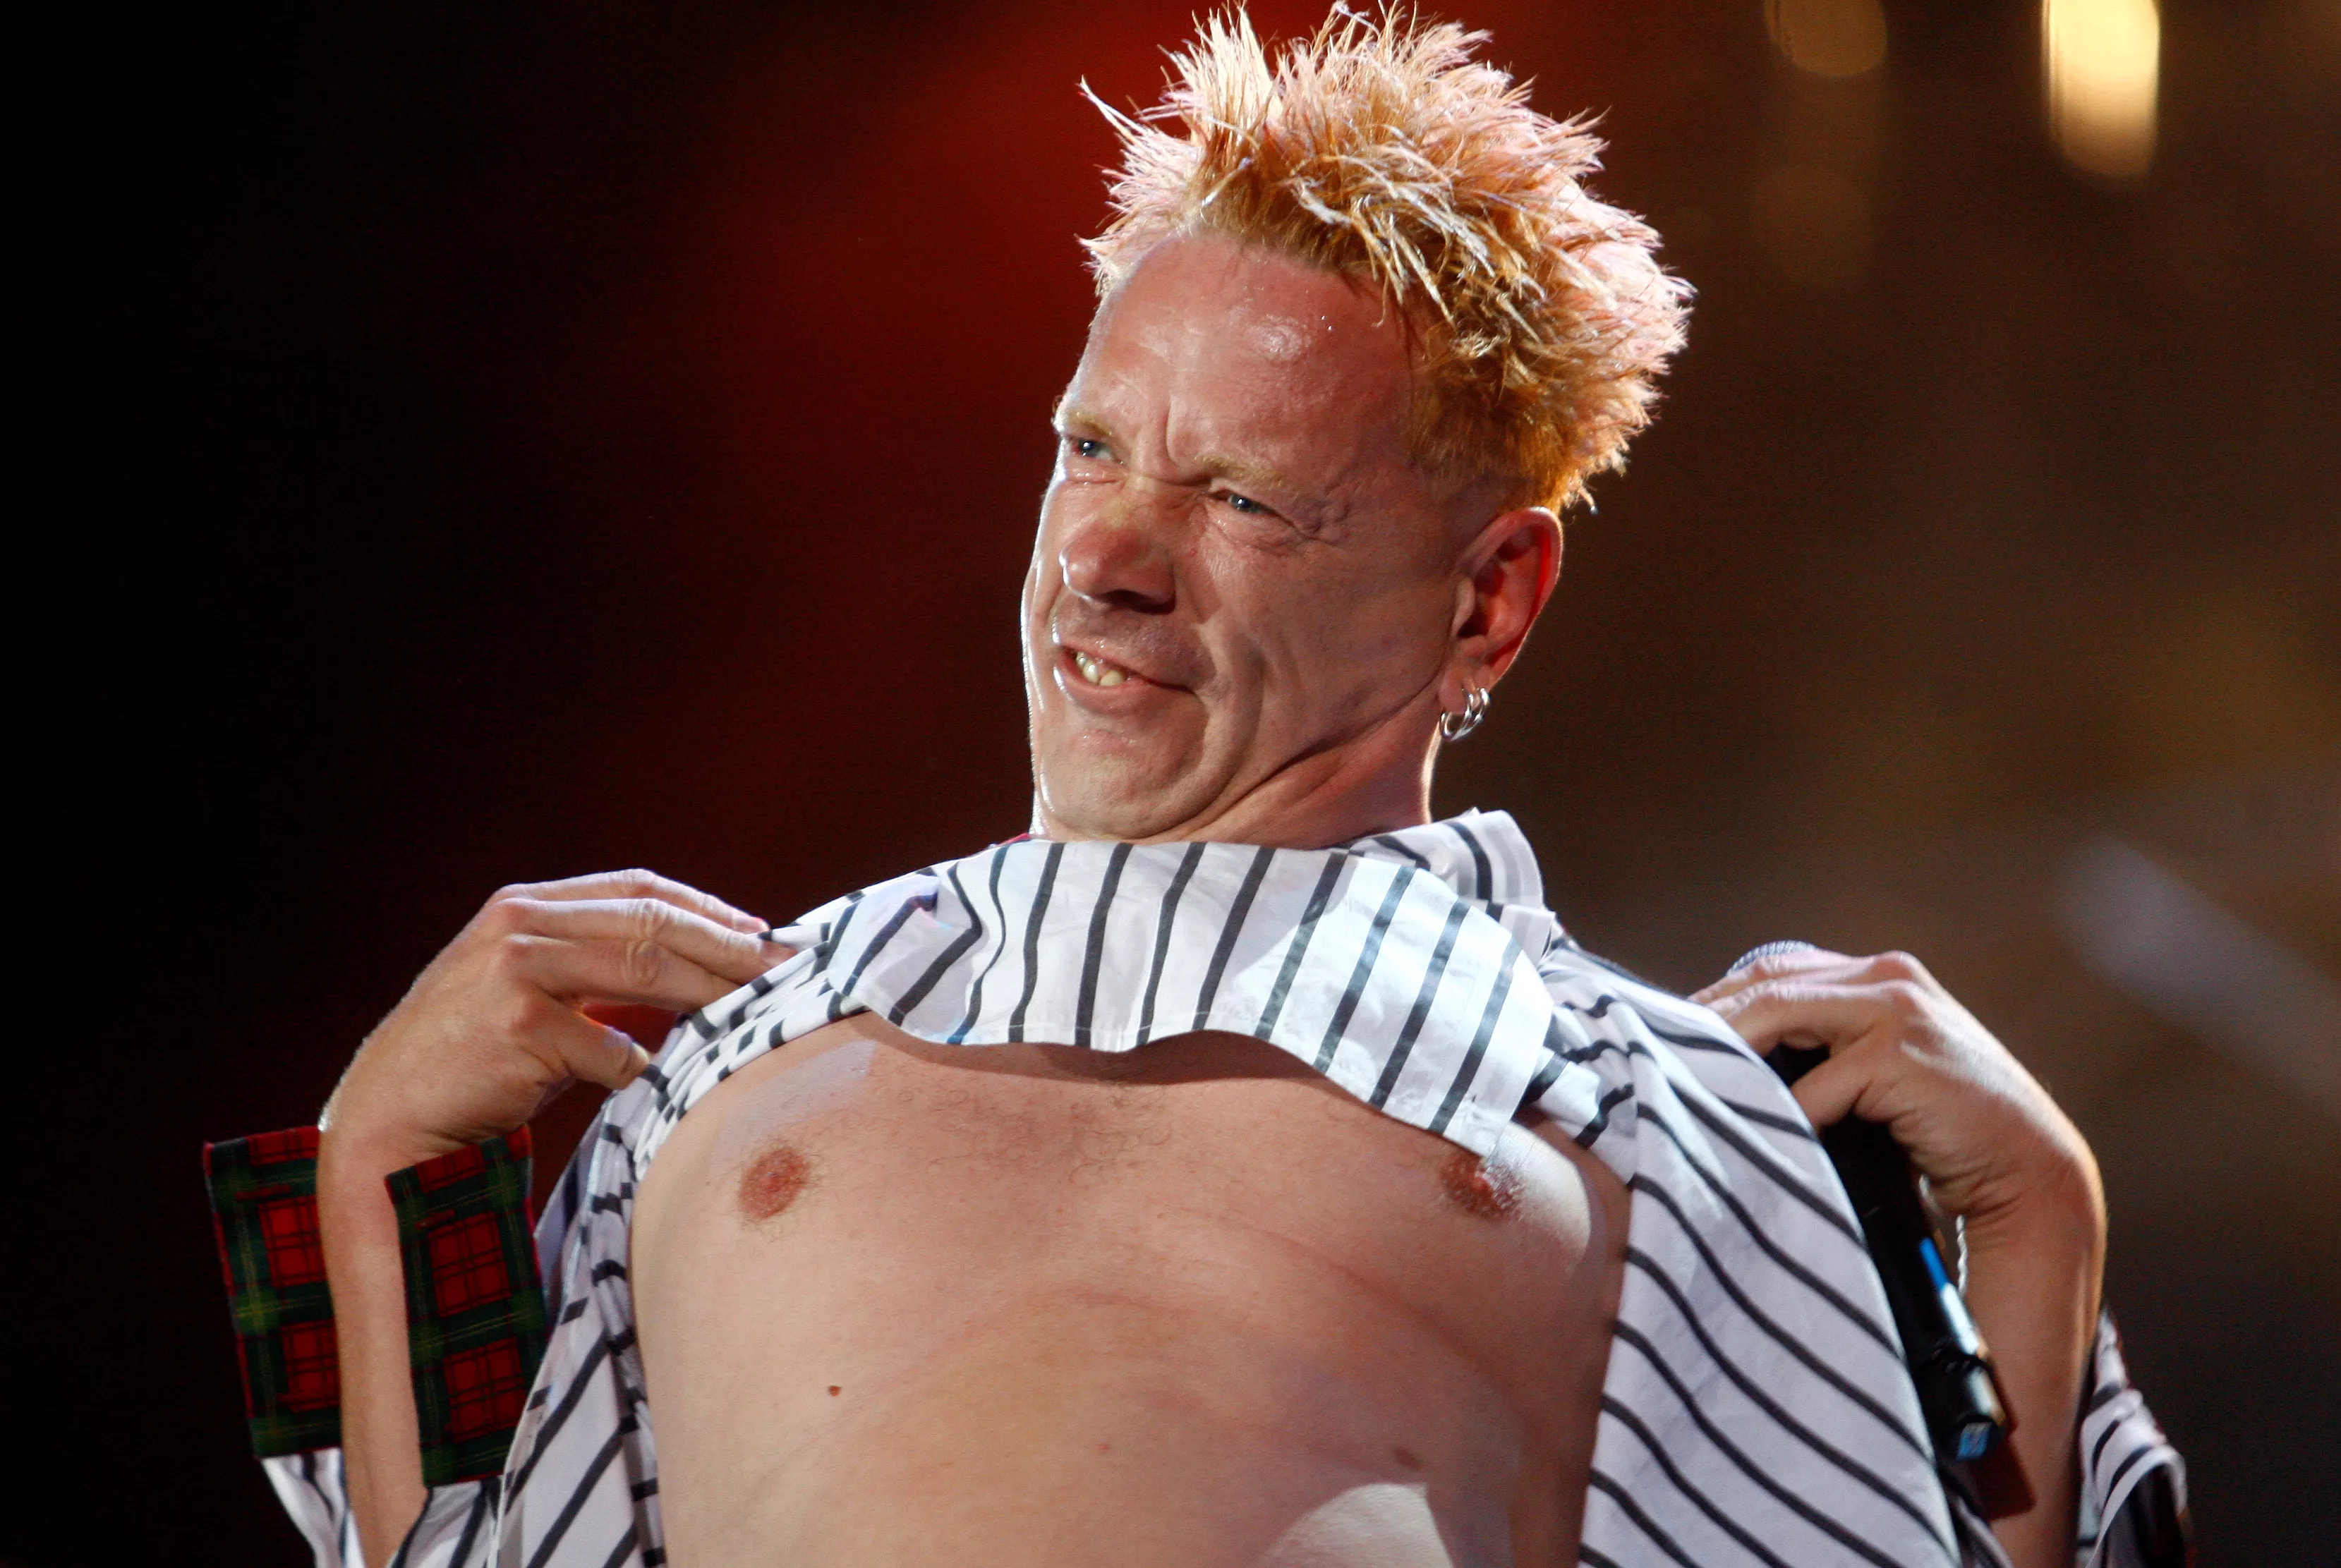 Sex Pistols-vokalisten til Eurovision?